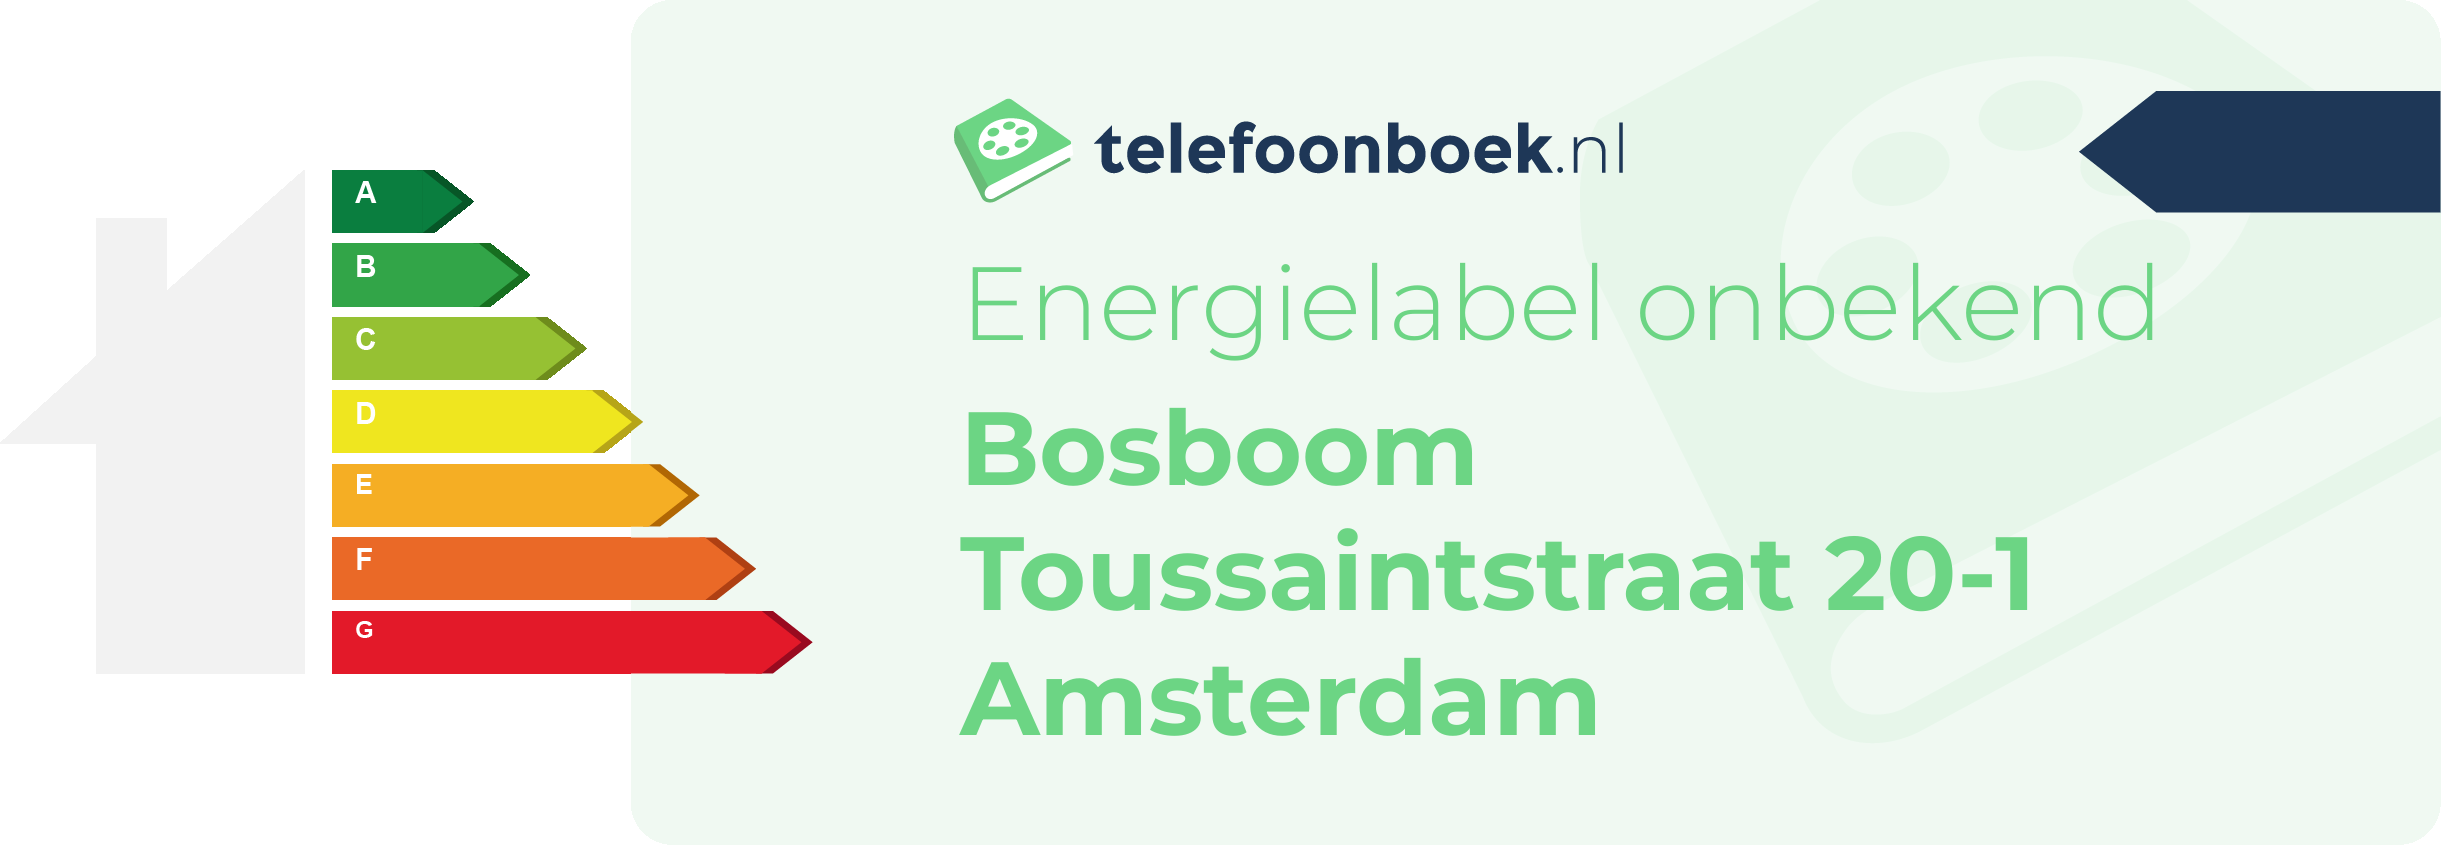 Energielabel Bosboom Toussaintstraat 20-1 Amsterdam